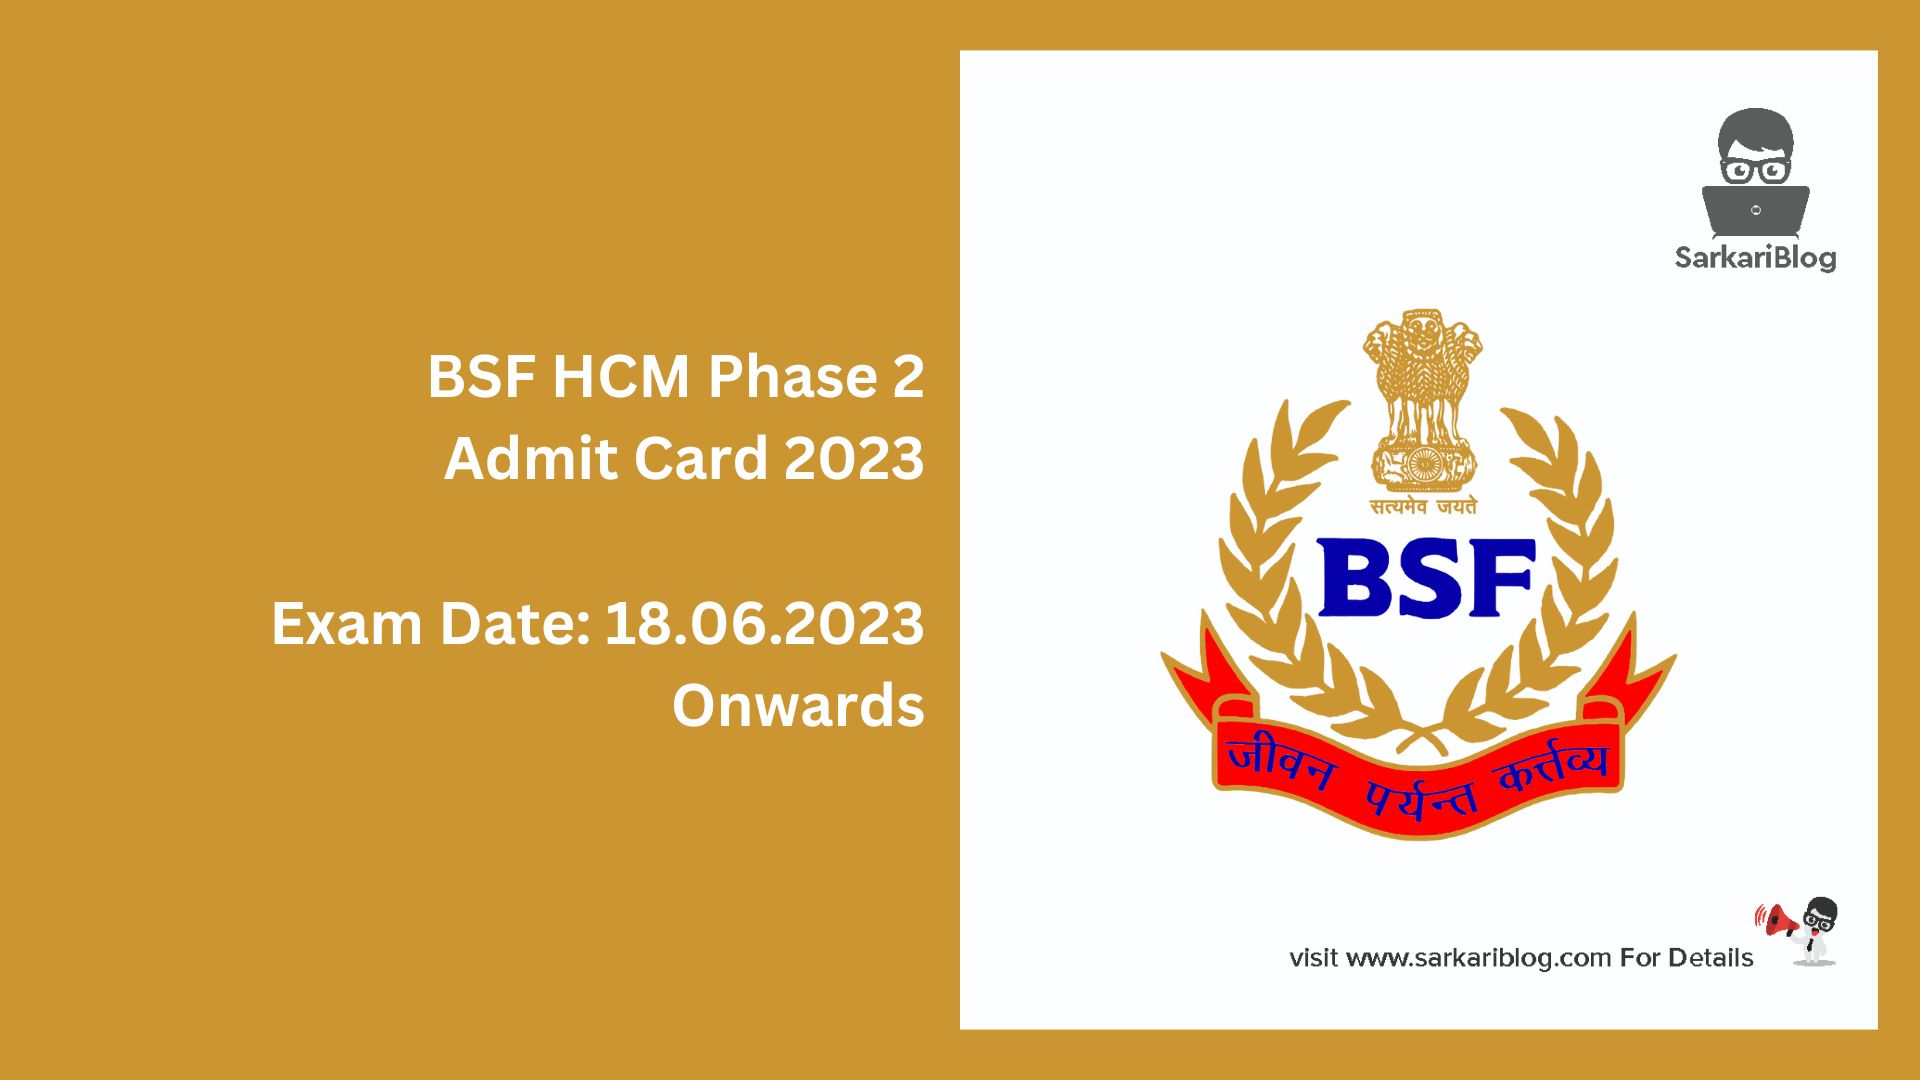 BSF HCM Phase 2 Admit Card 2023